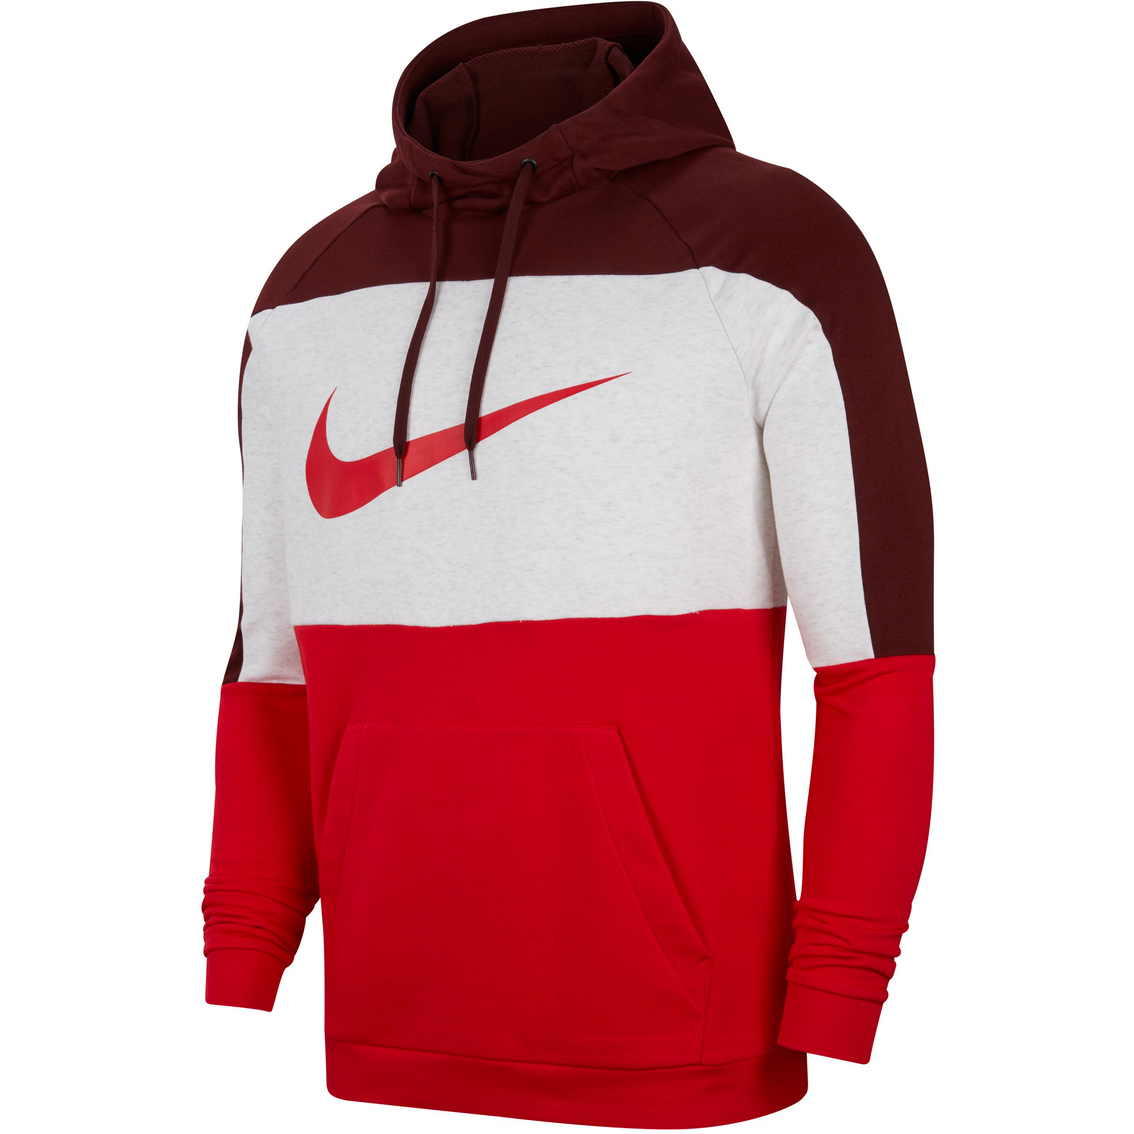 Nike Dri-fit Pullover Training Hoodie | Hoodies & Jackets | Clothing ...